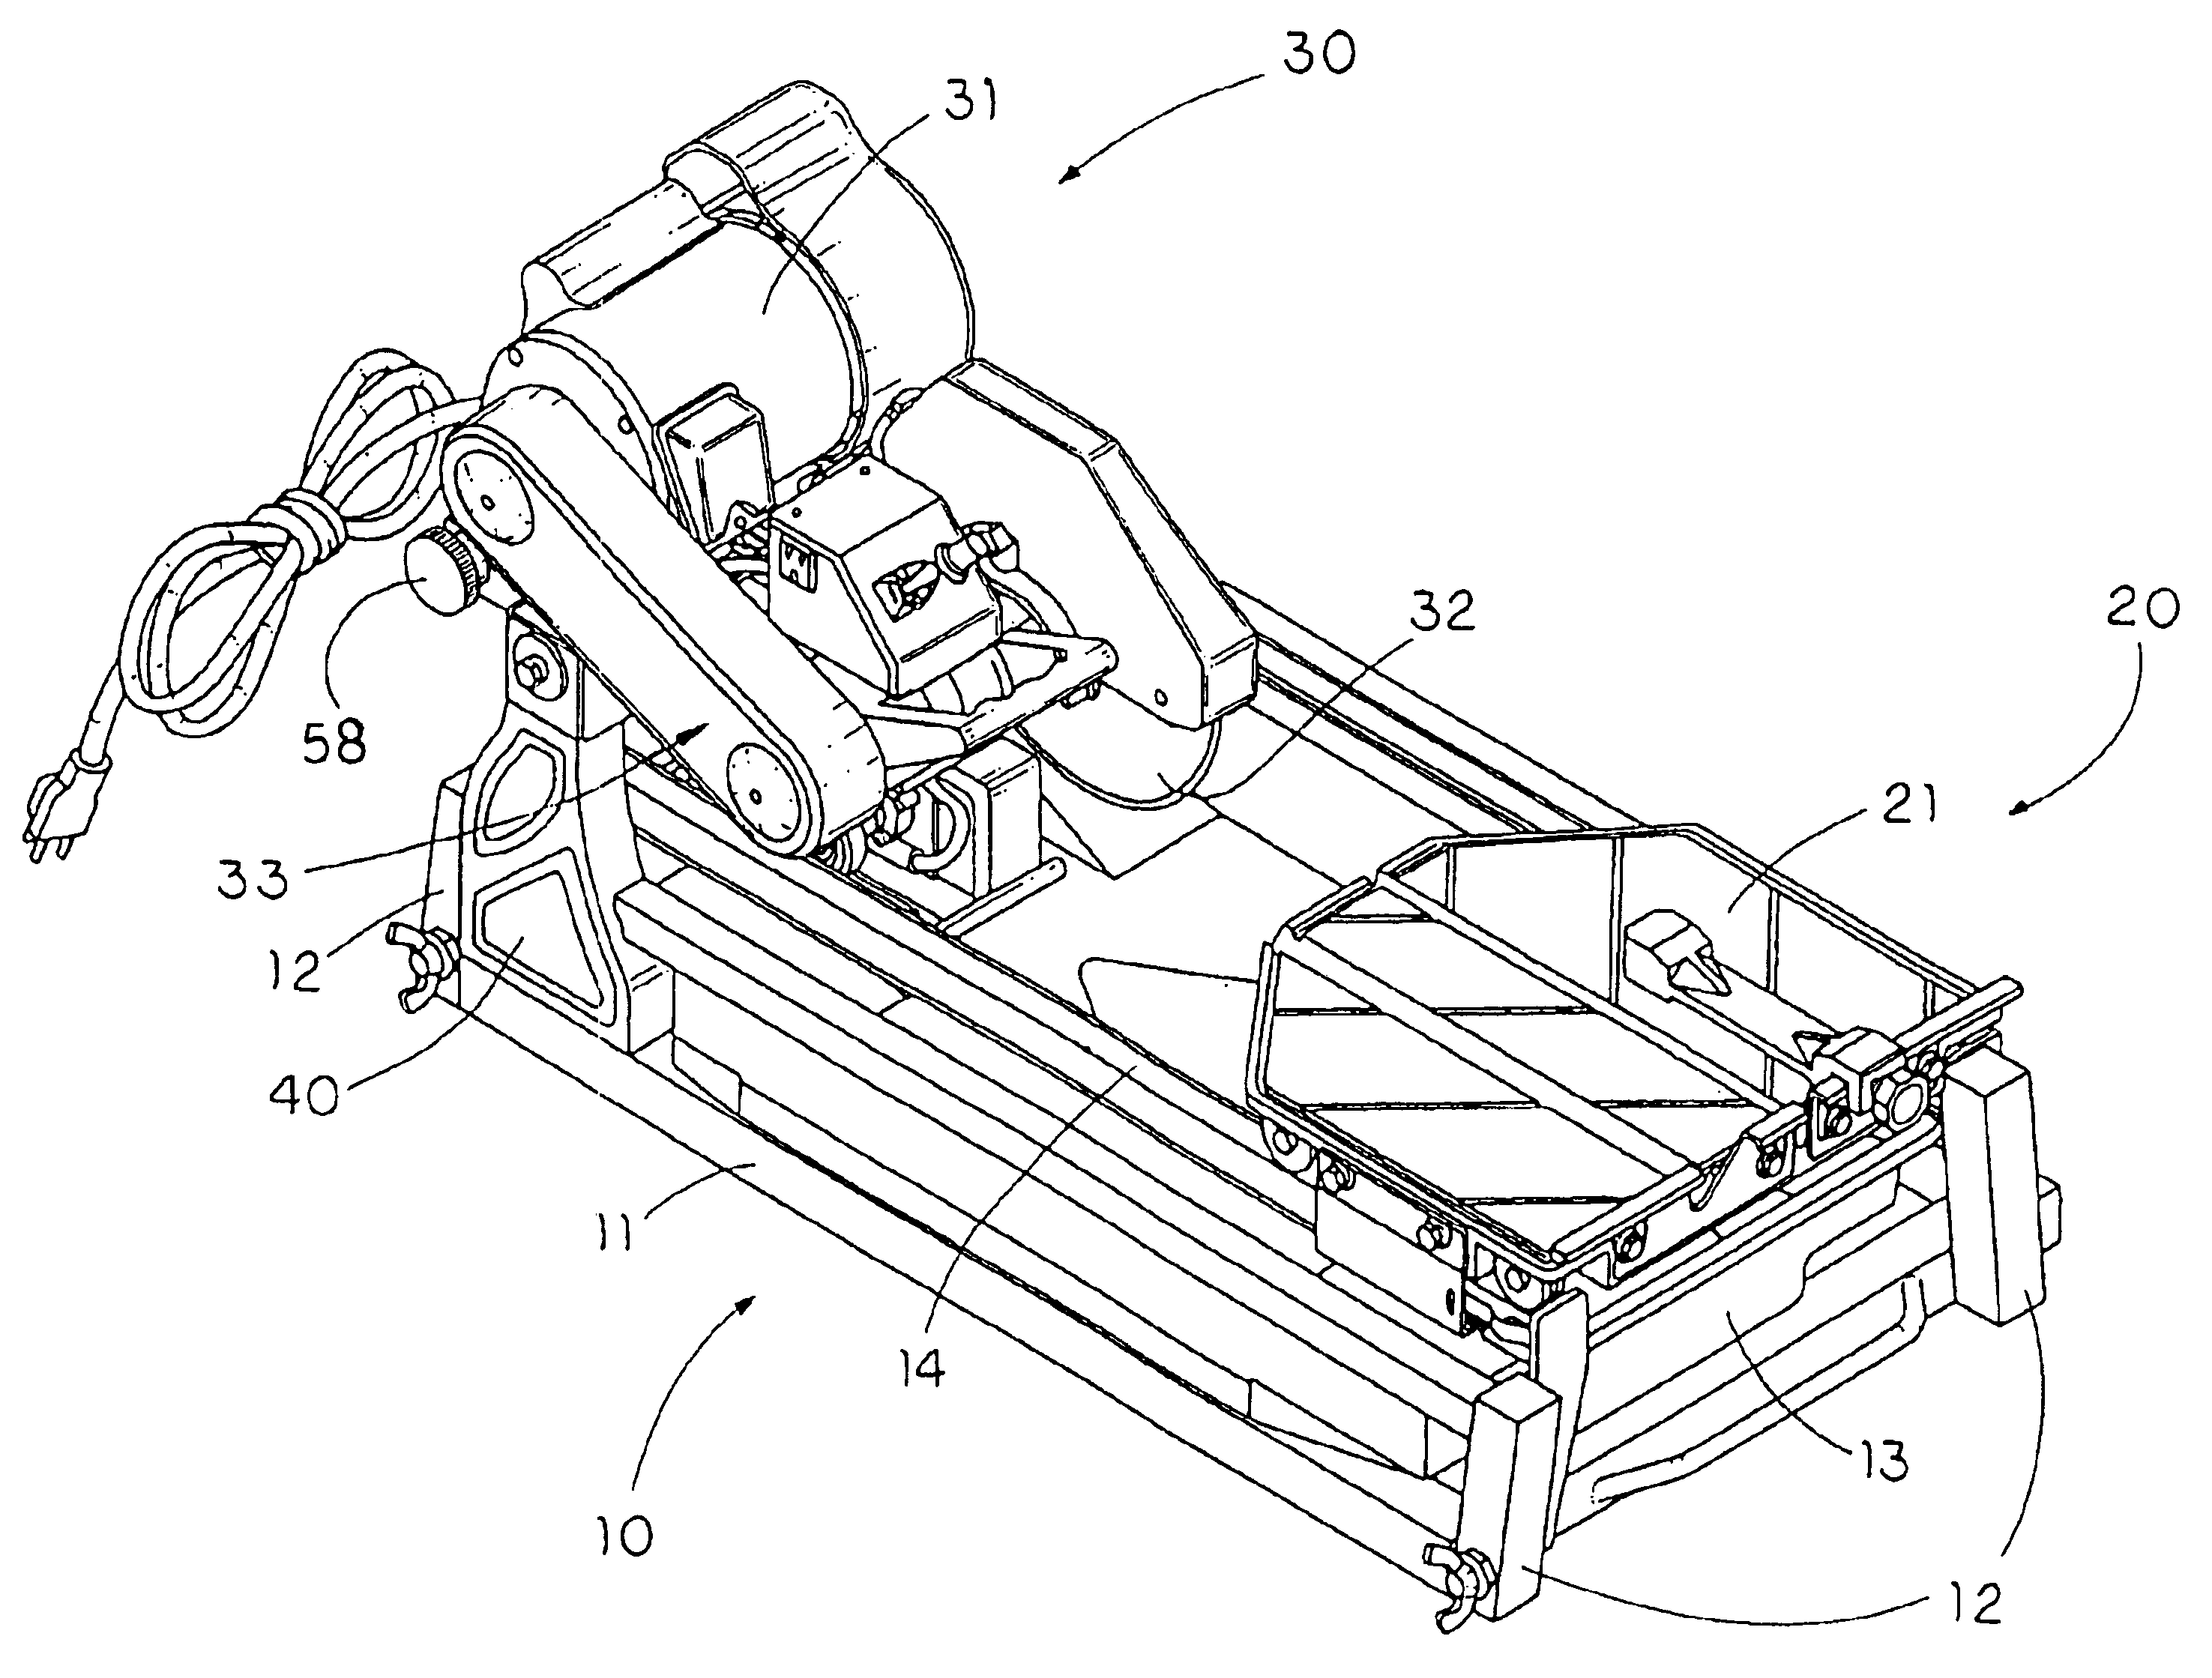 Cutting machine with built-in miter cutting feature